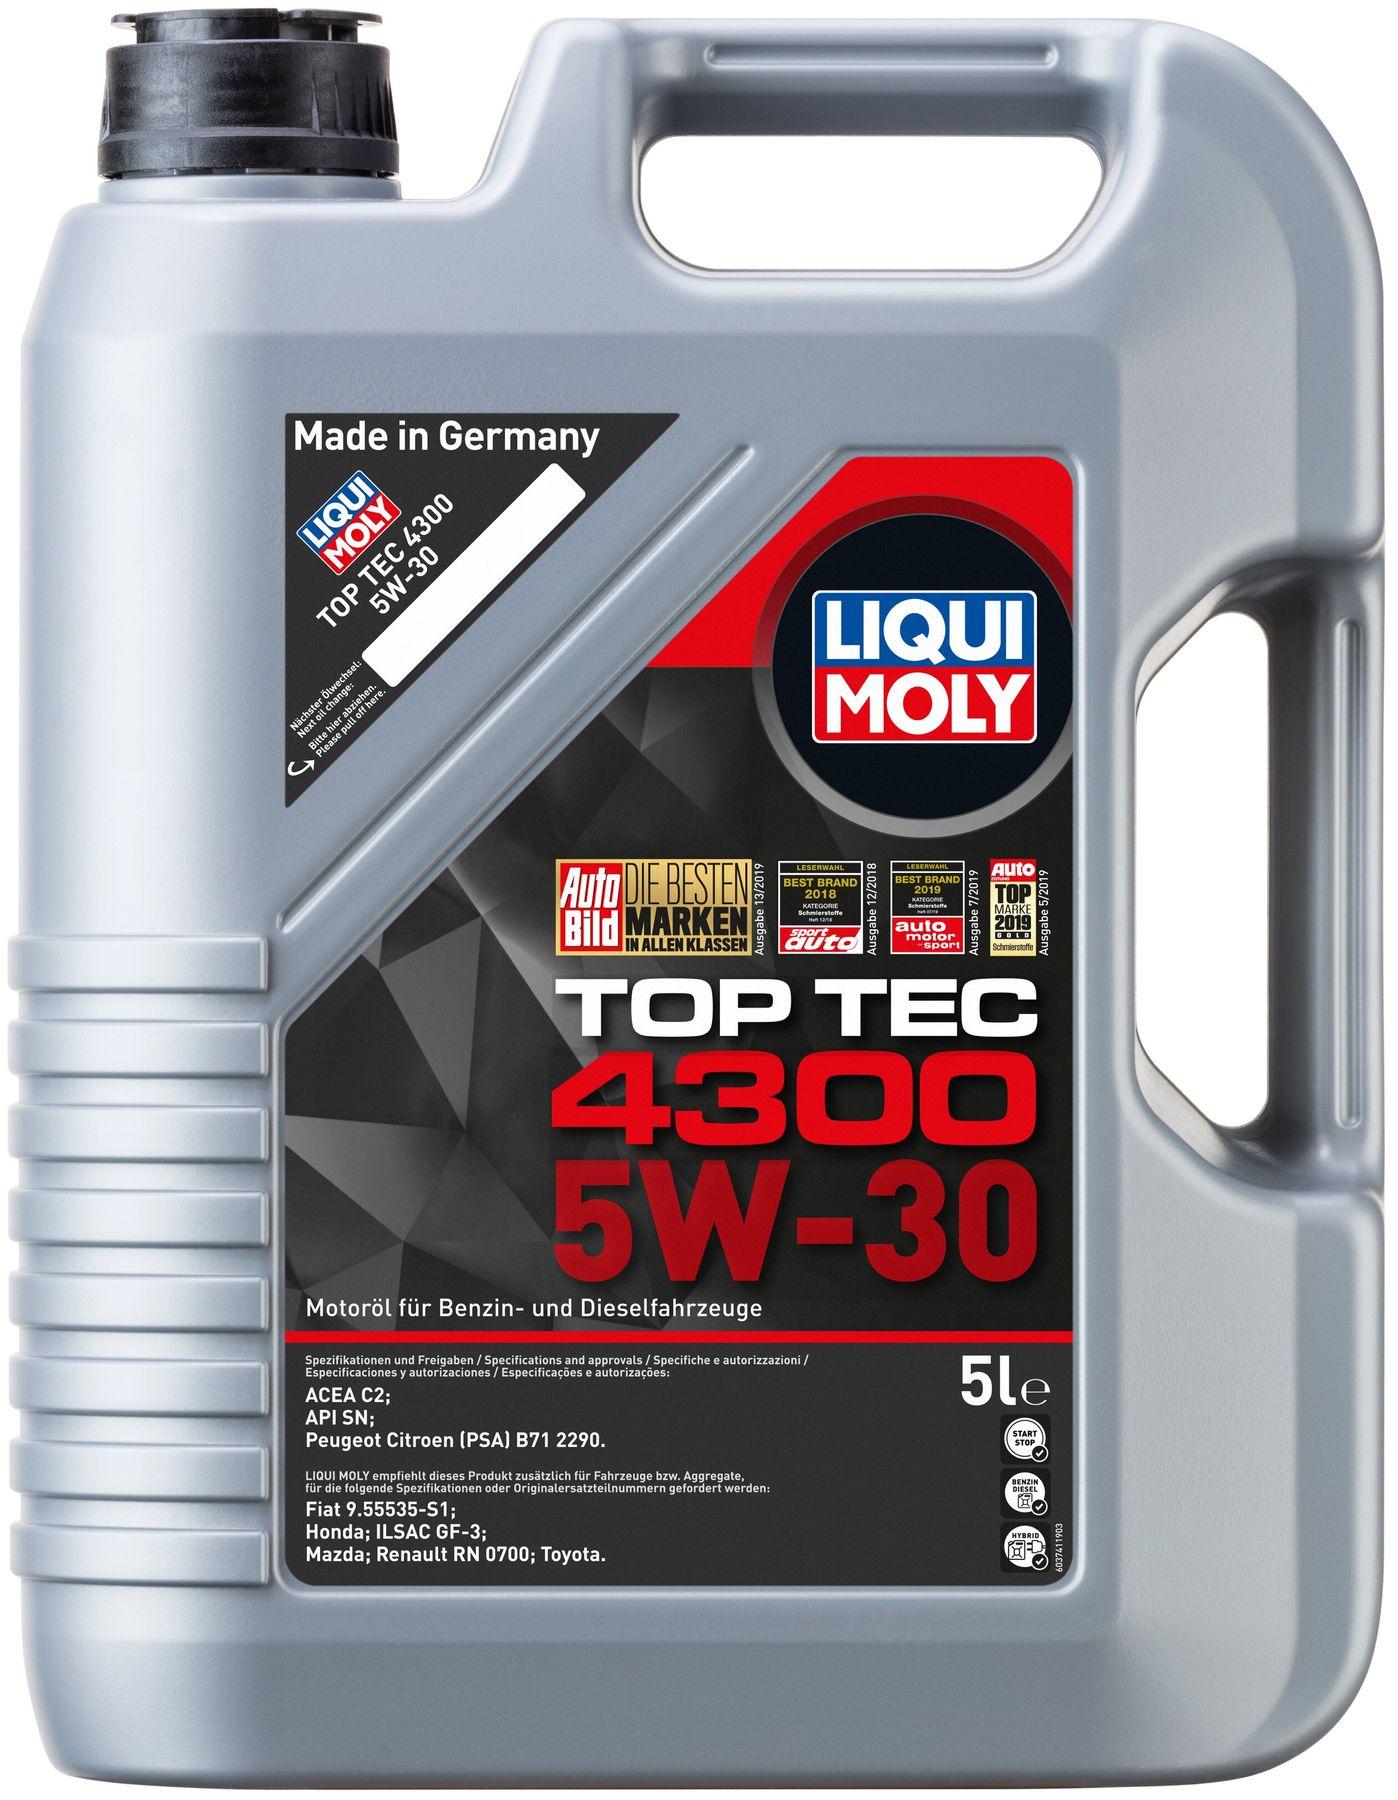 Моторное масло Liqui Moly Top Tec 4300 5W-30, 5 литров (8031)